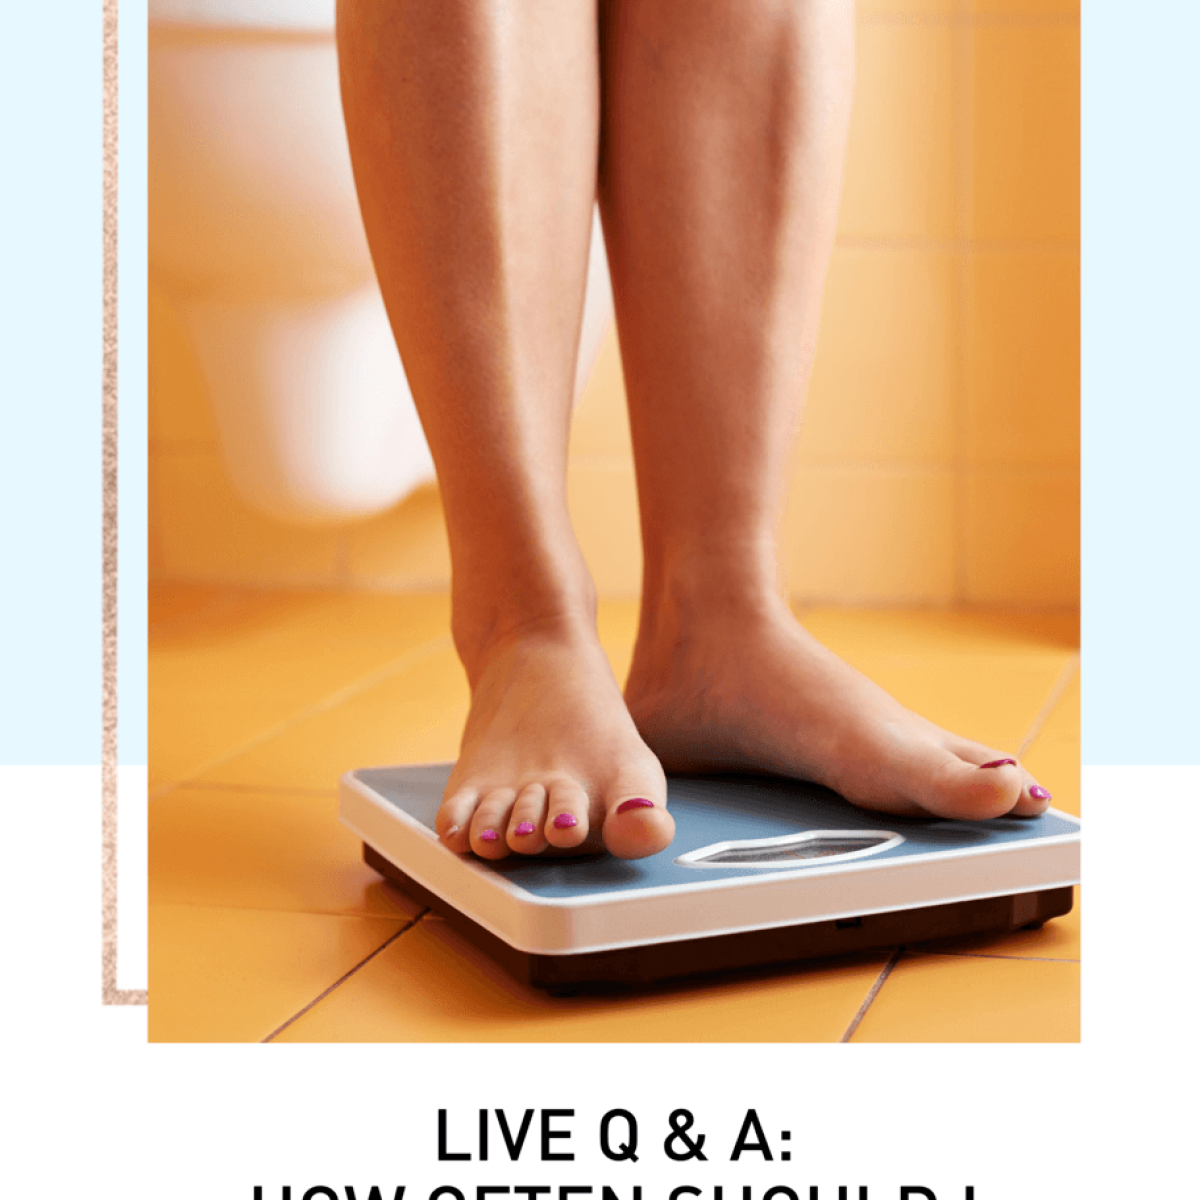 Live q & a how often should i weigh myself?.